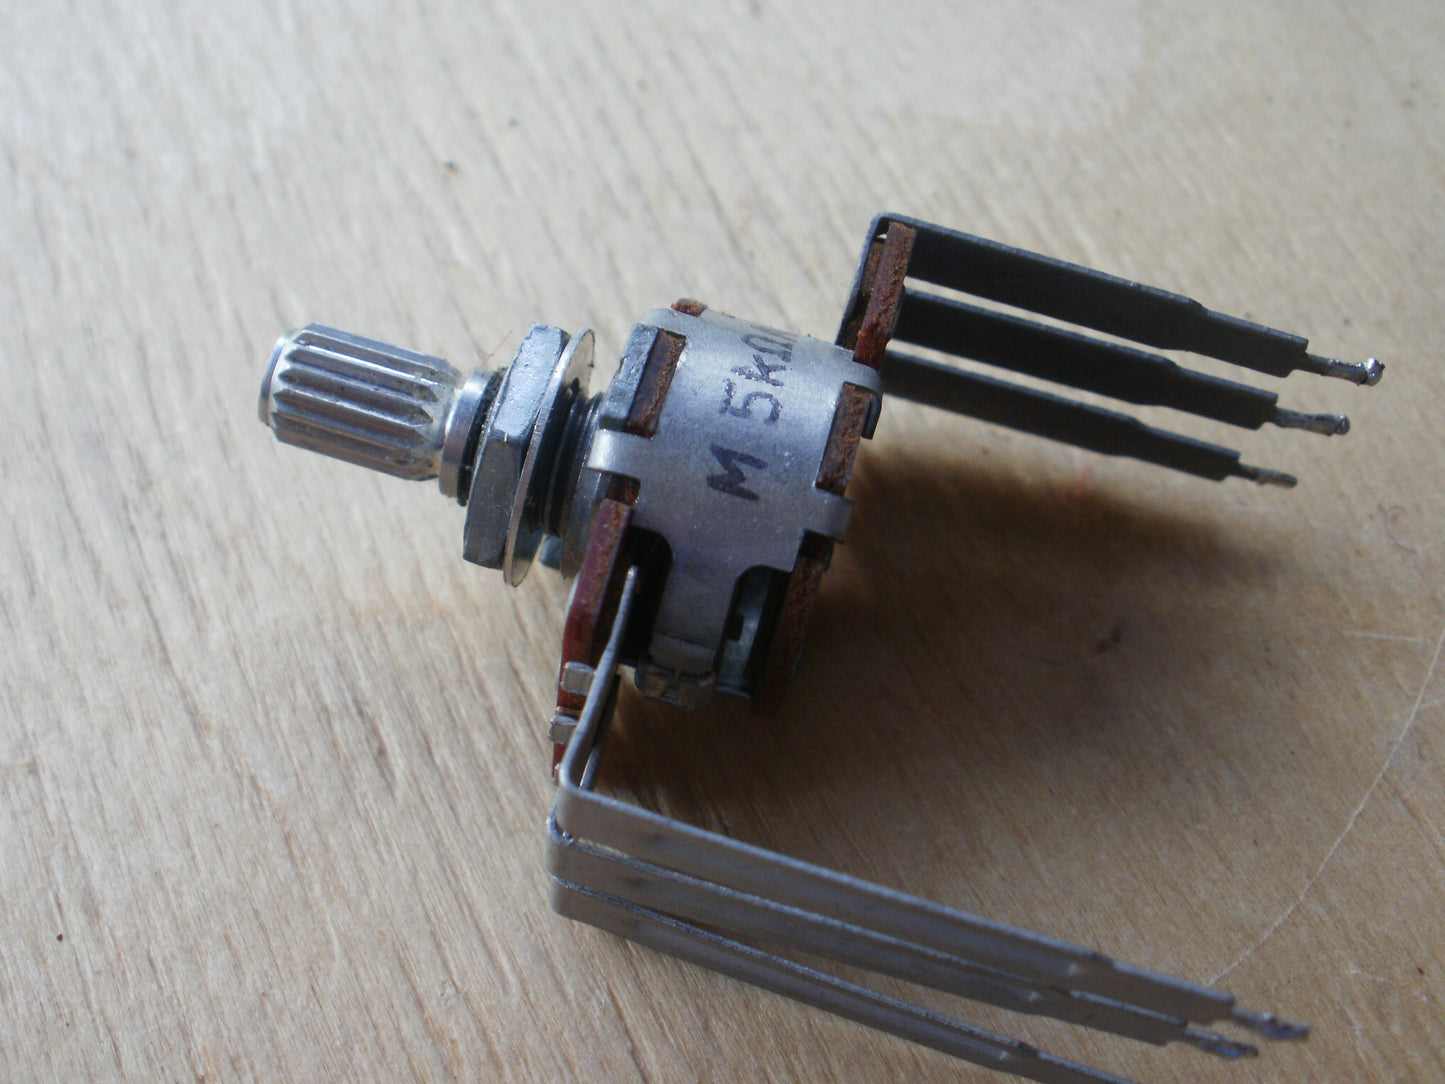 Tascam Portastudio 144 Variable resistors